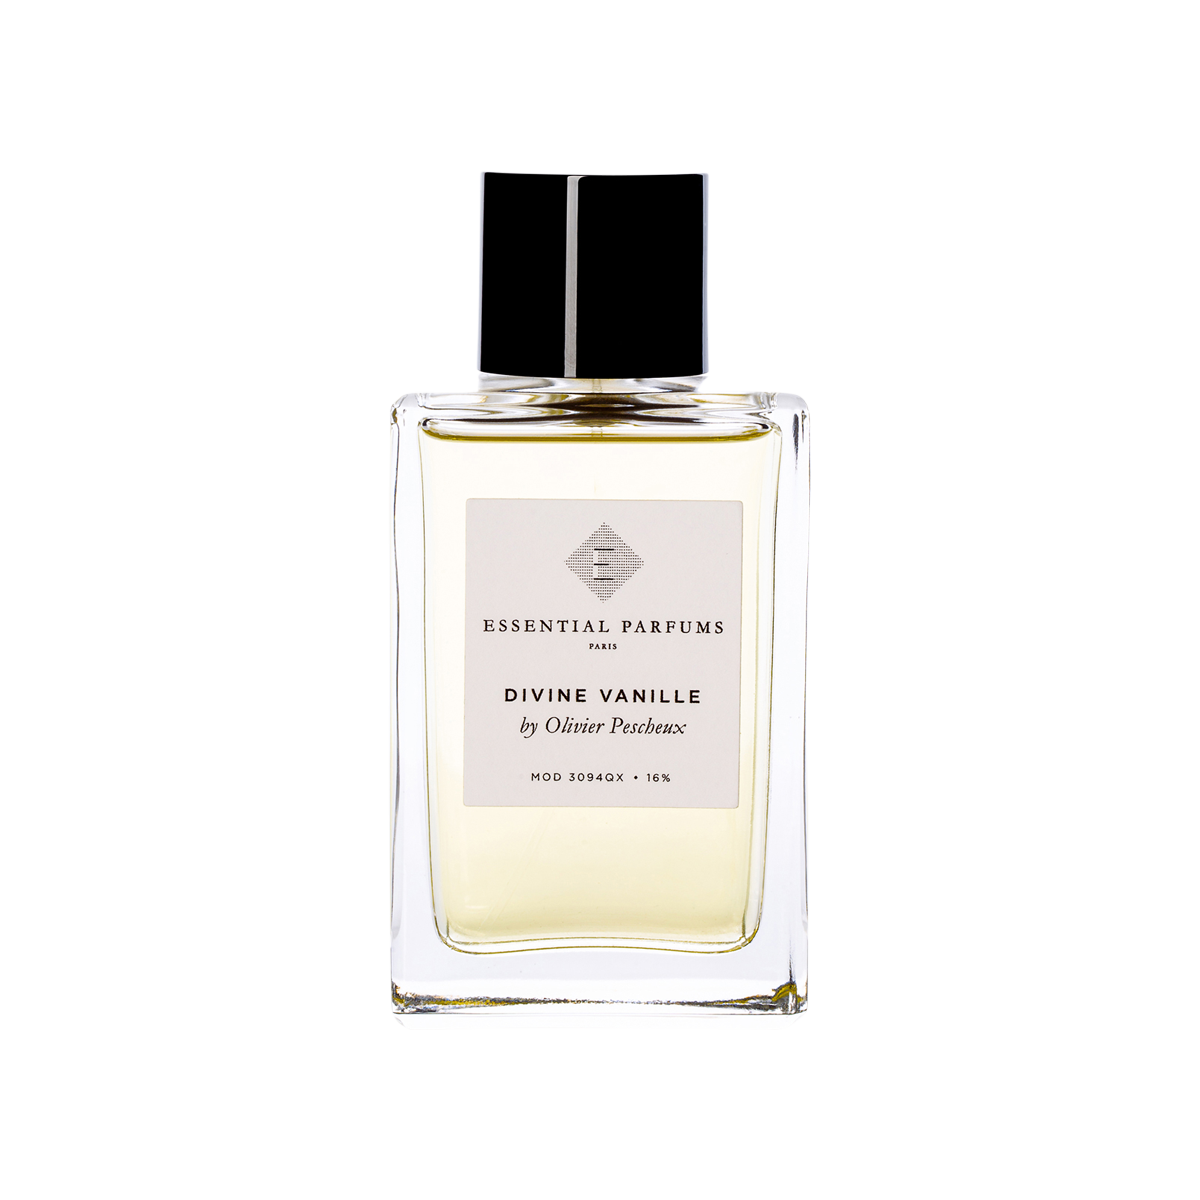 Essential Parfums - Divine Vanille Refillable